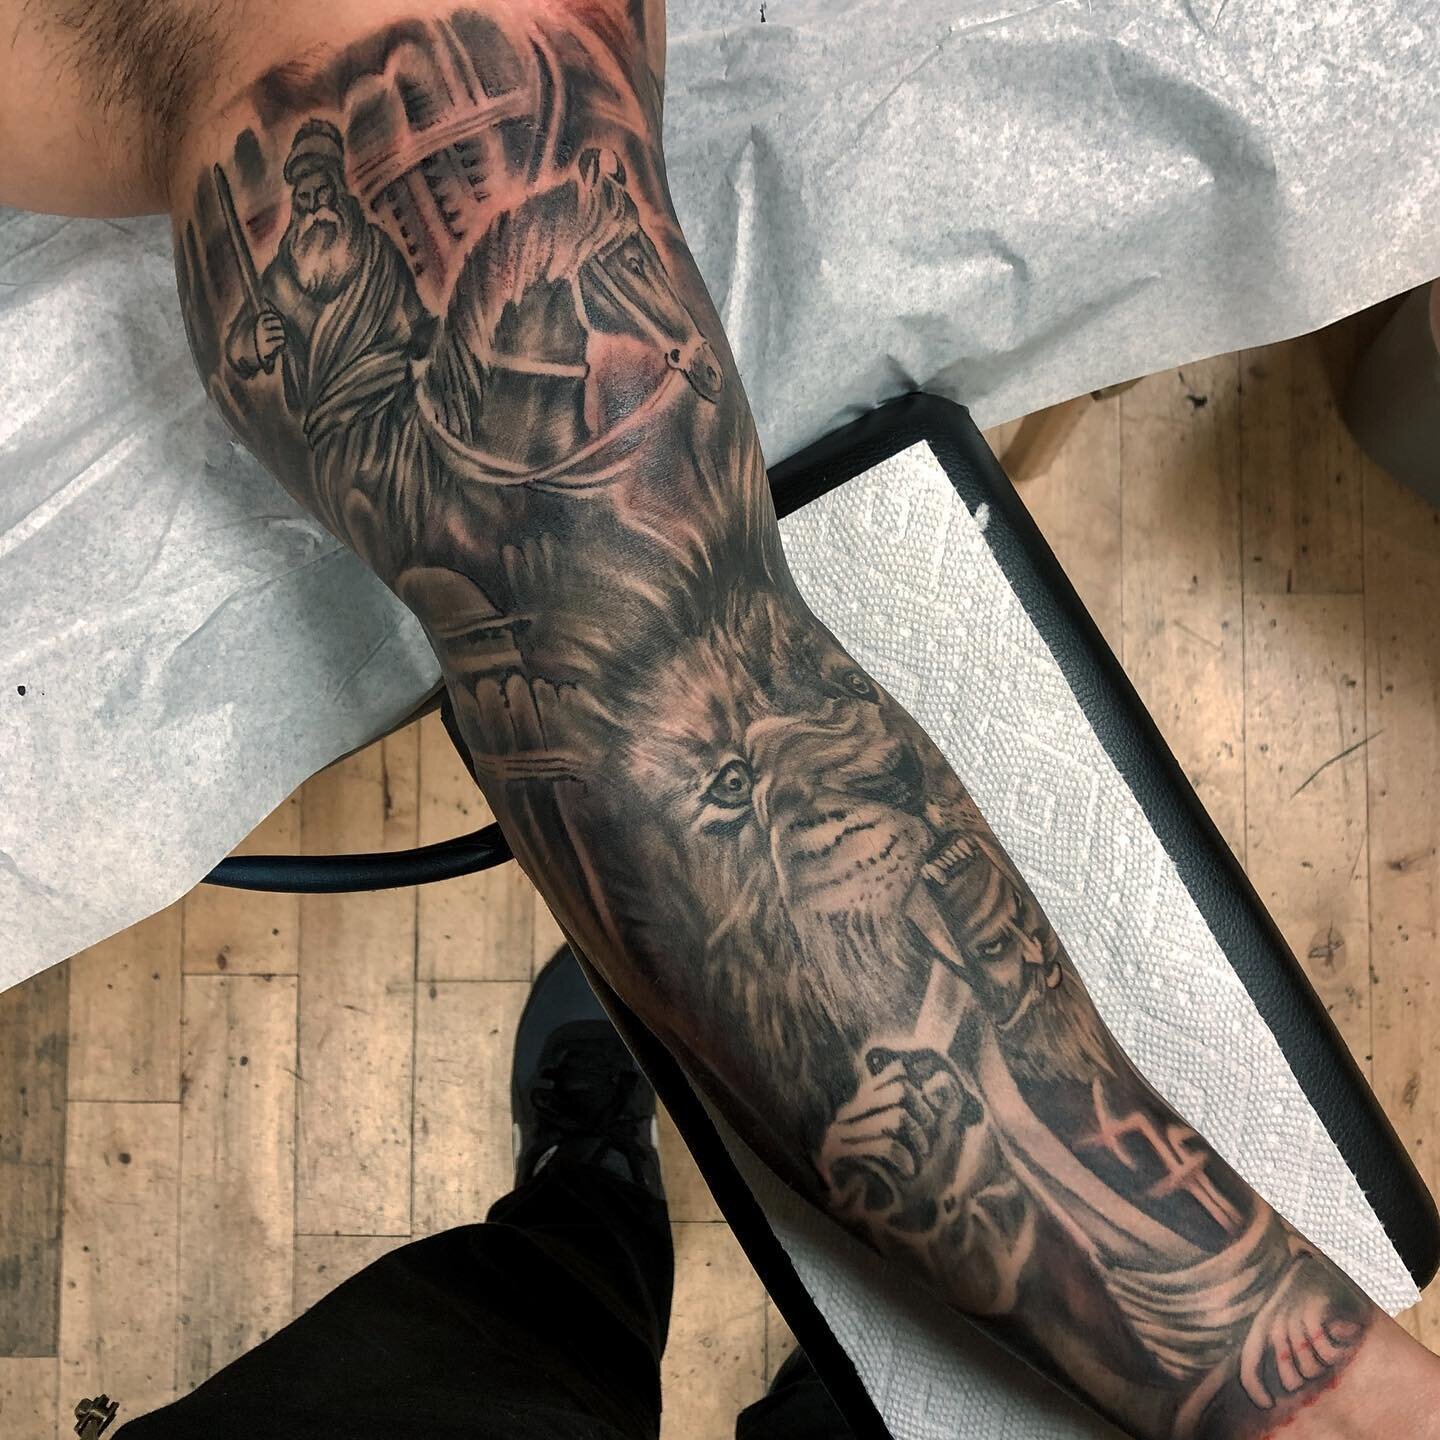 👉mostly healed👈
.
Done using @eldiabloneedles 
.
.
.

#fullsleevetattoo #tattoo #tattoos #ink #inked #tattooart #tattooideas #traditional #tattoodesign #tattooed #tattoolife #kylefreshink #tattooink #blackandgreytattoo #blackworktattoo #tattooing #